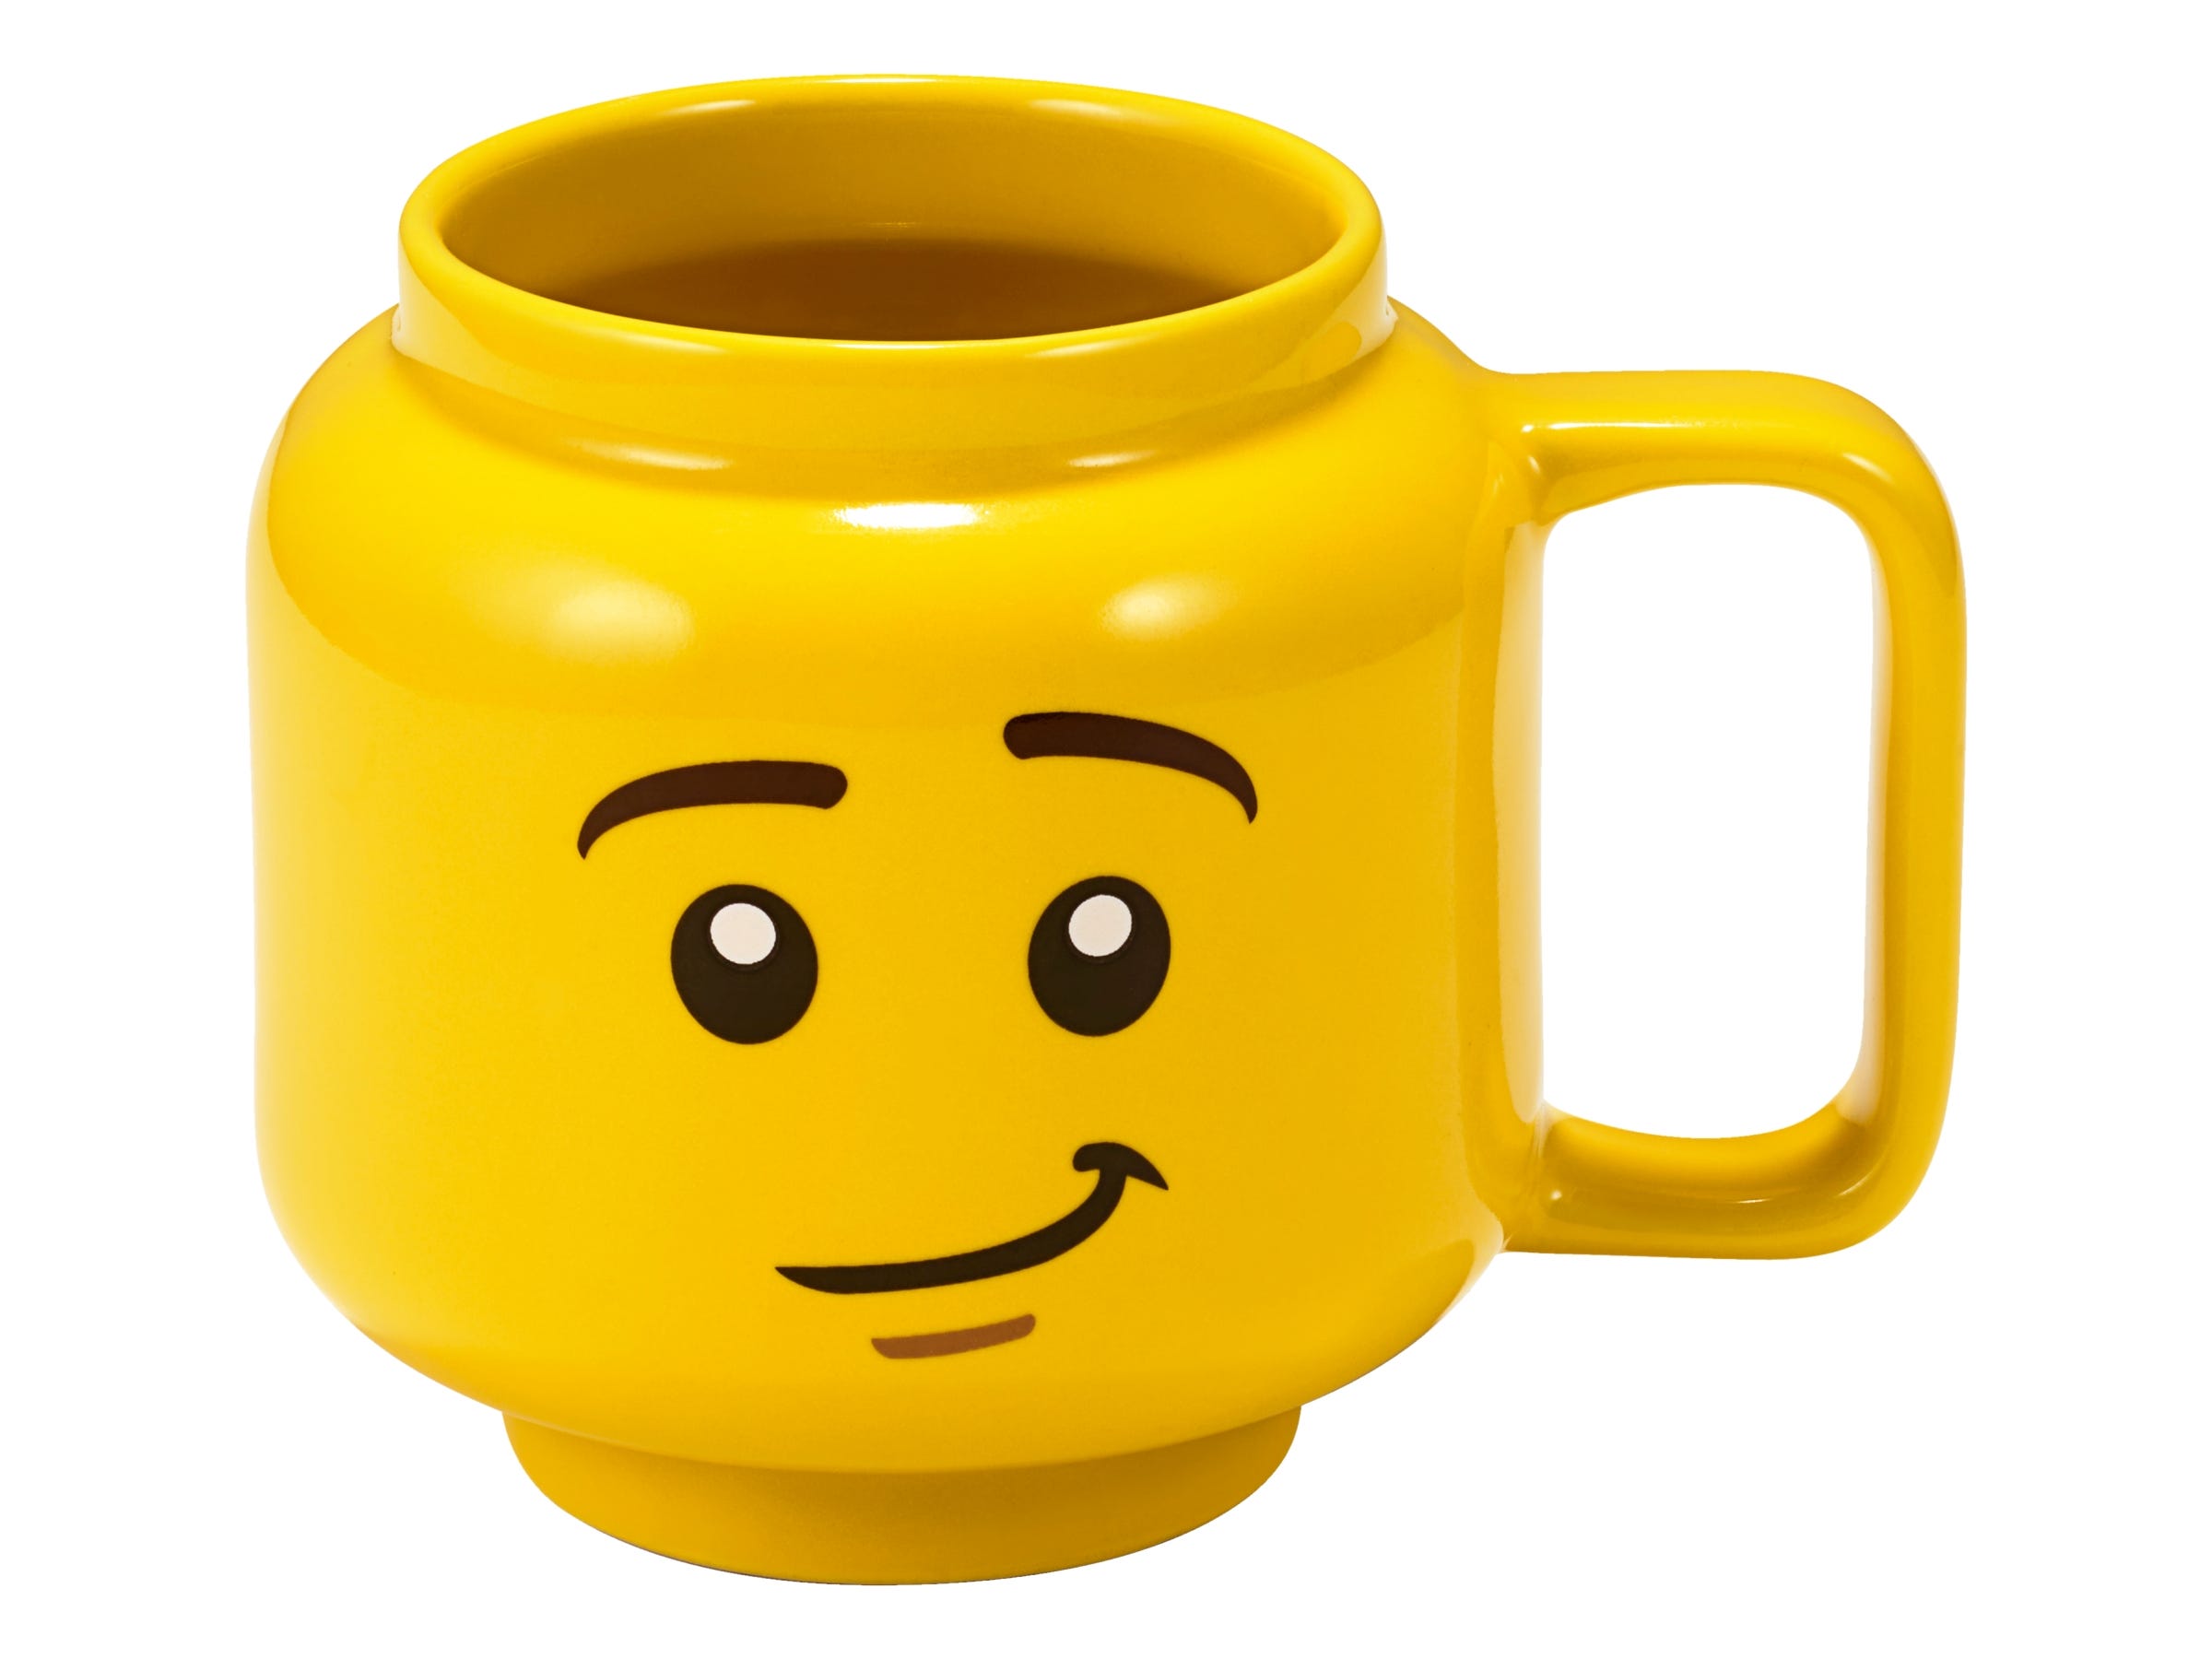 LEGO Minifigure Ceramic Mug